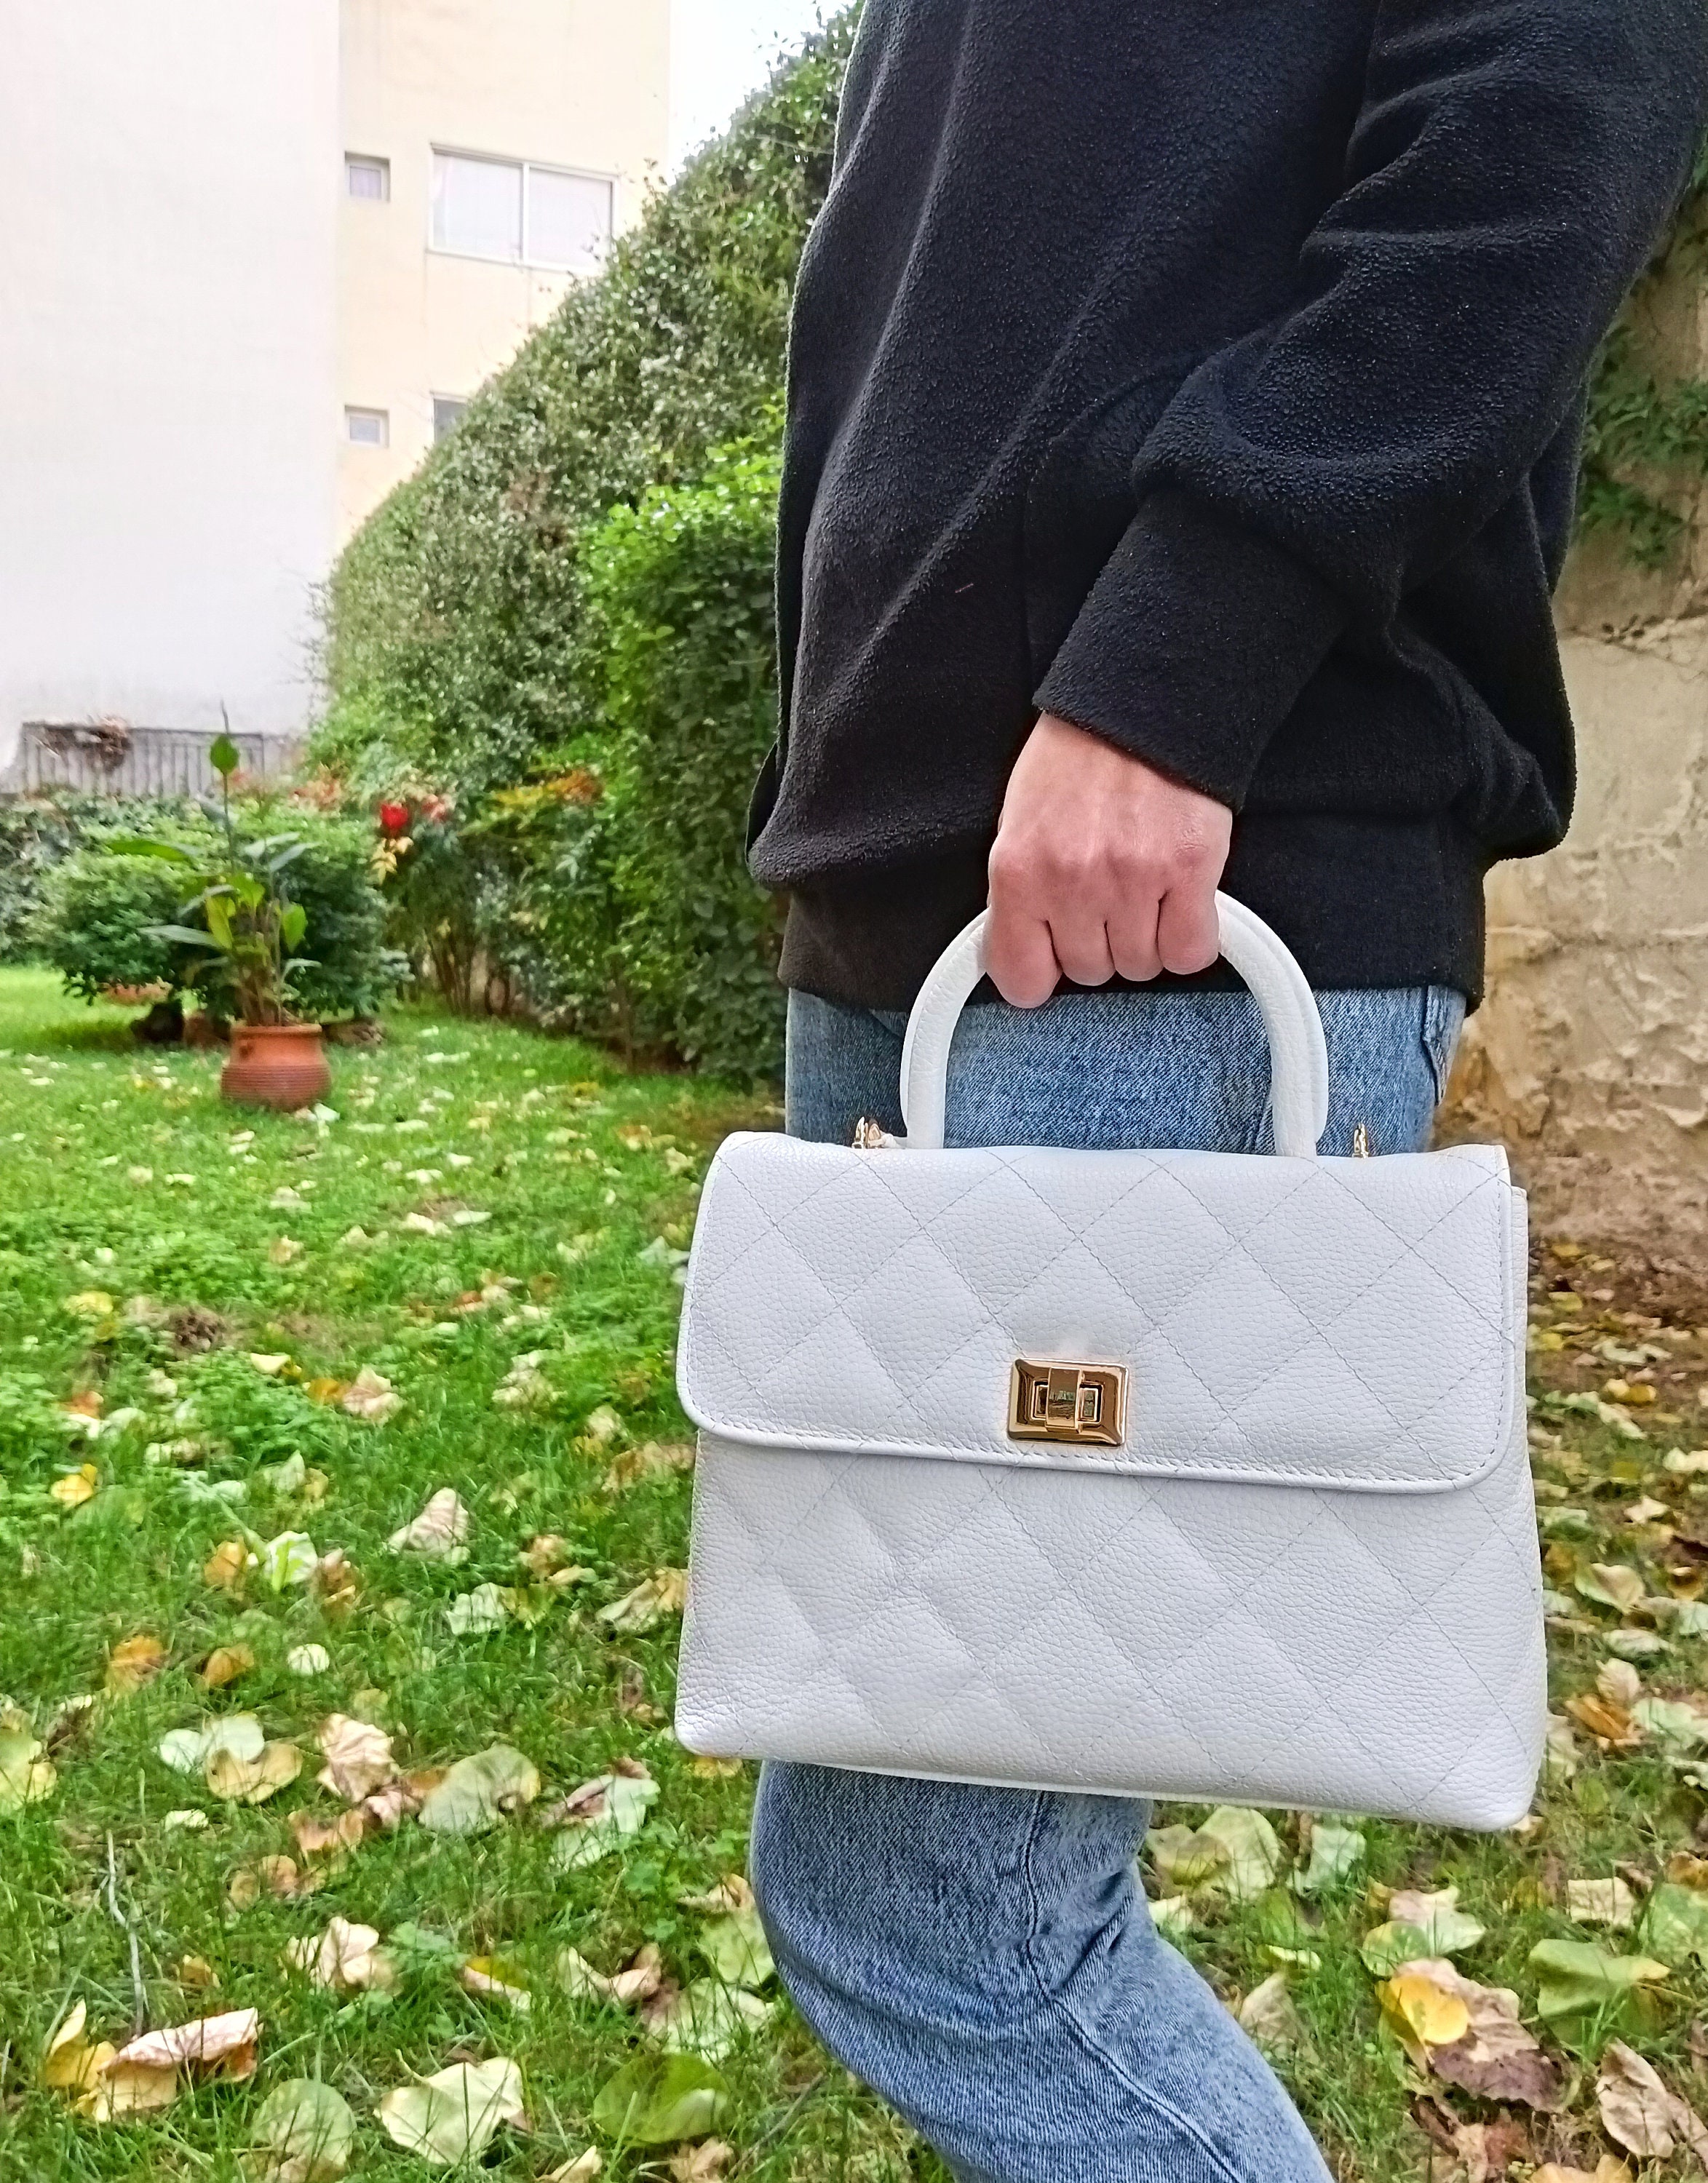 Chanel Mini Flap Grained Calfskin Leather Shoulder Bag